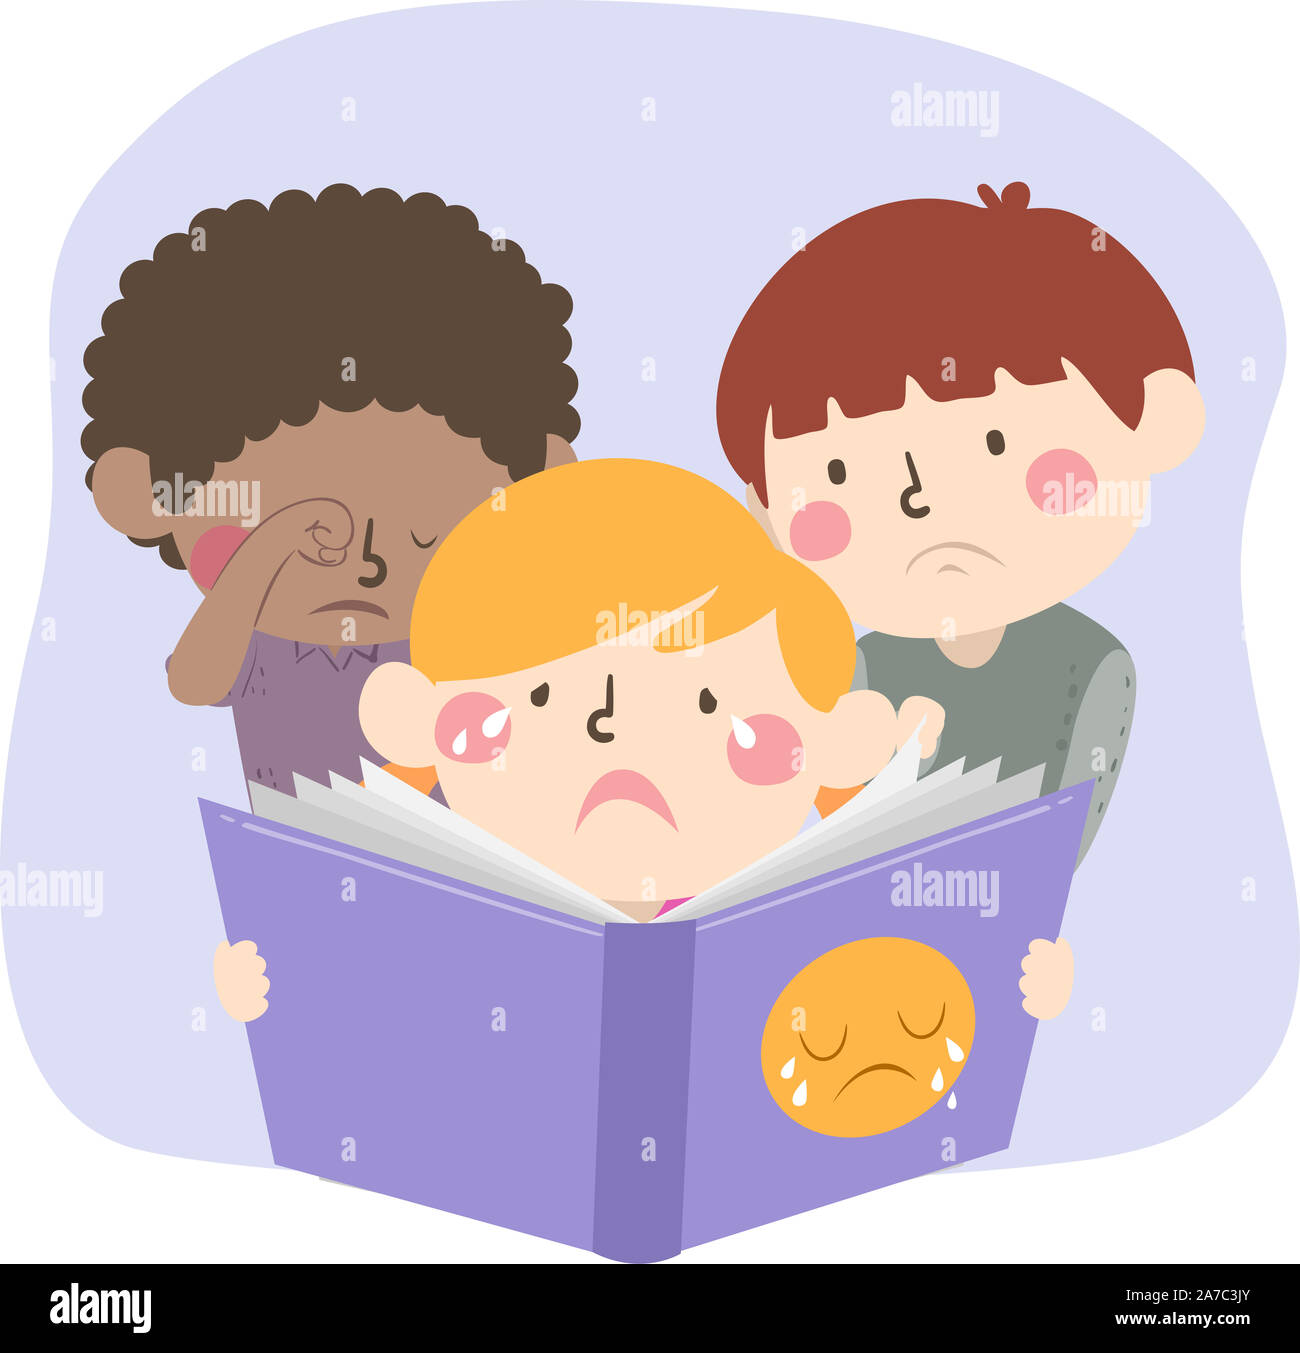 Illustration of Kids Feeling Sad and Reading a Sad Story Book Stock Photo